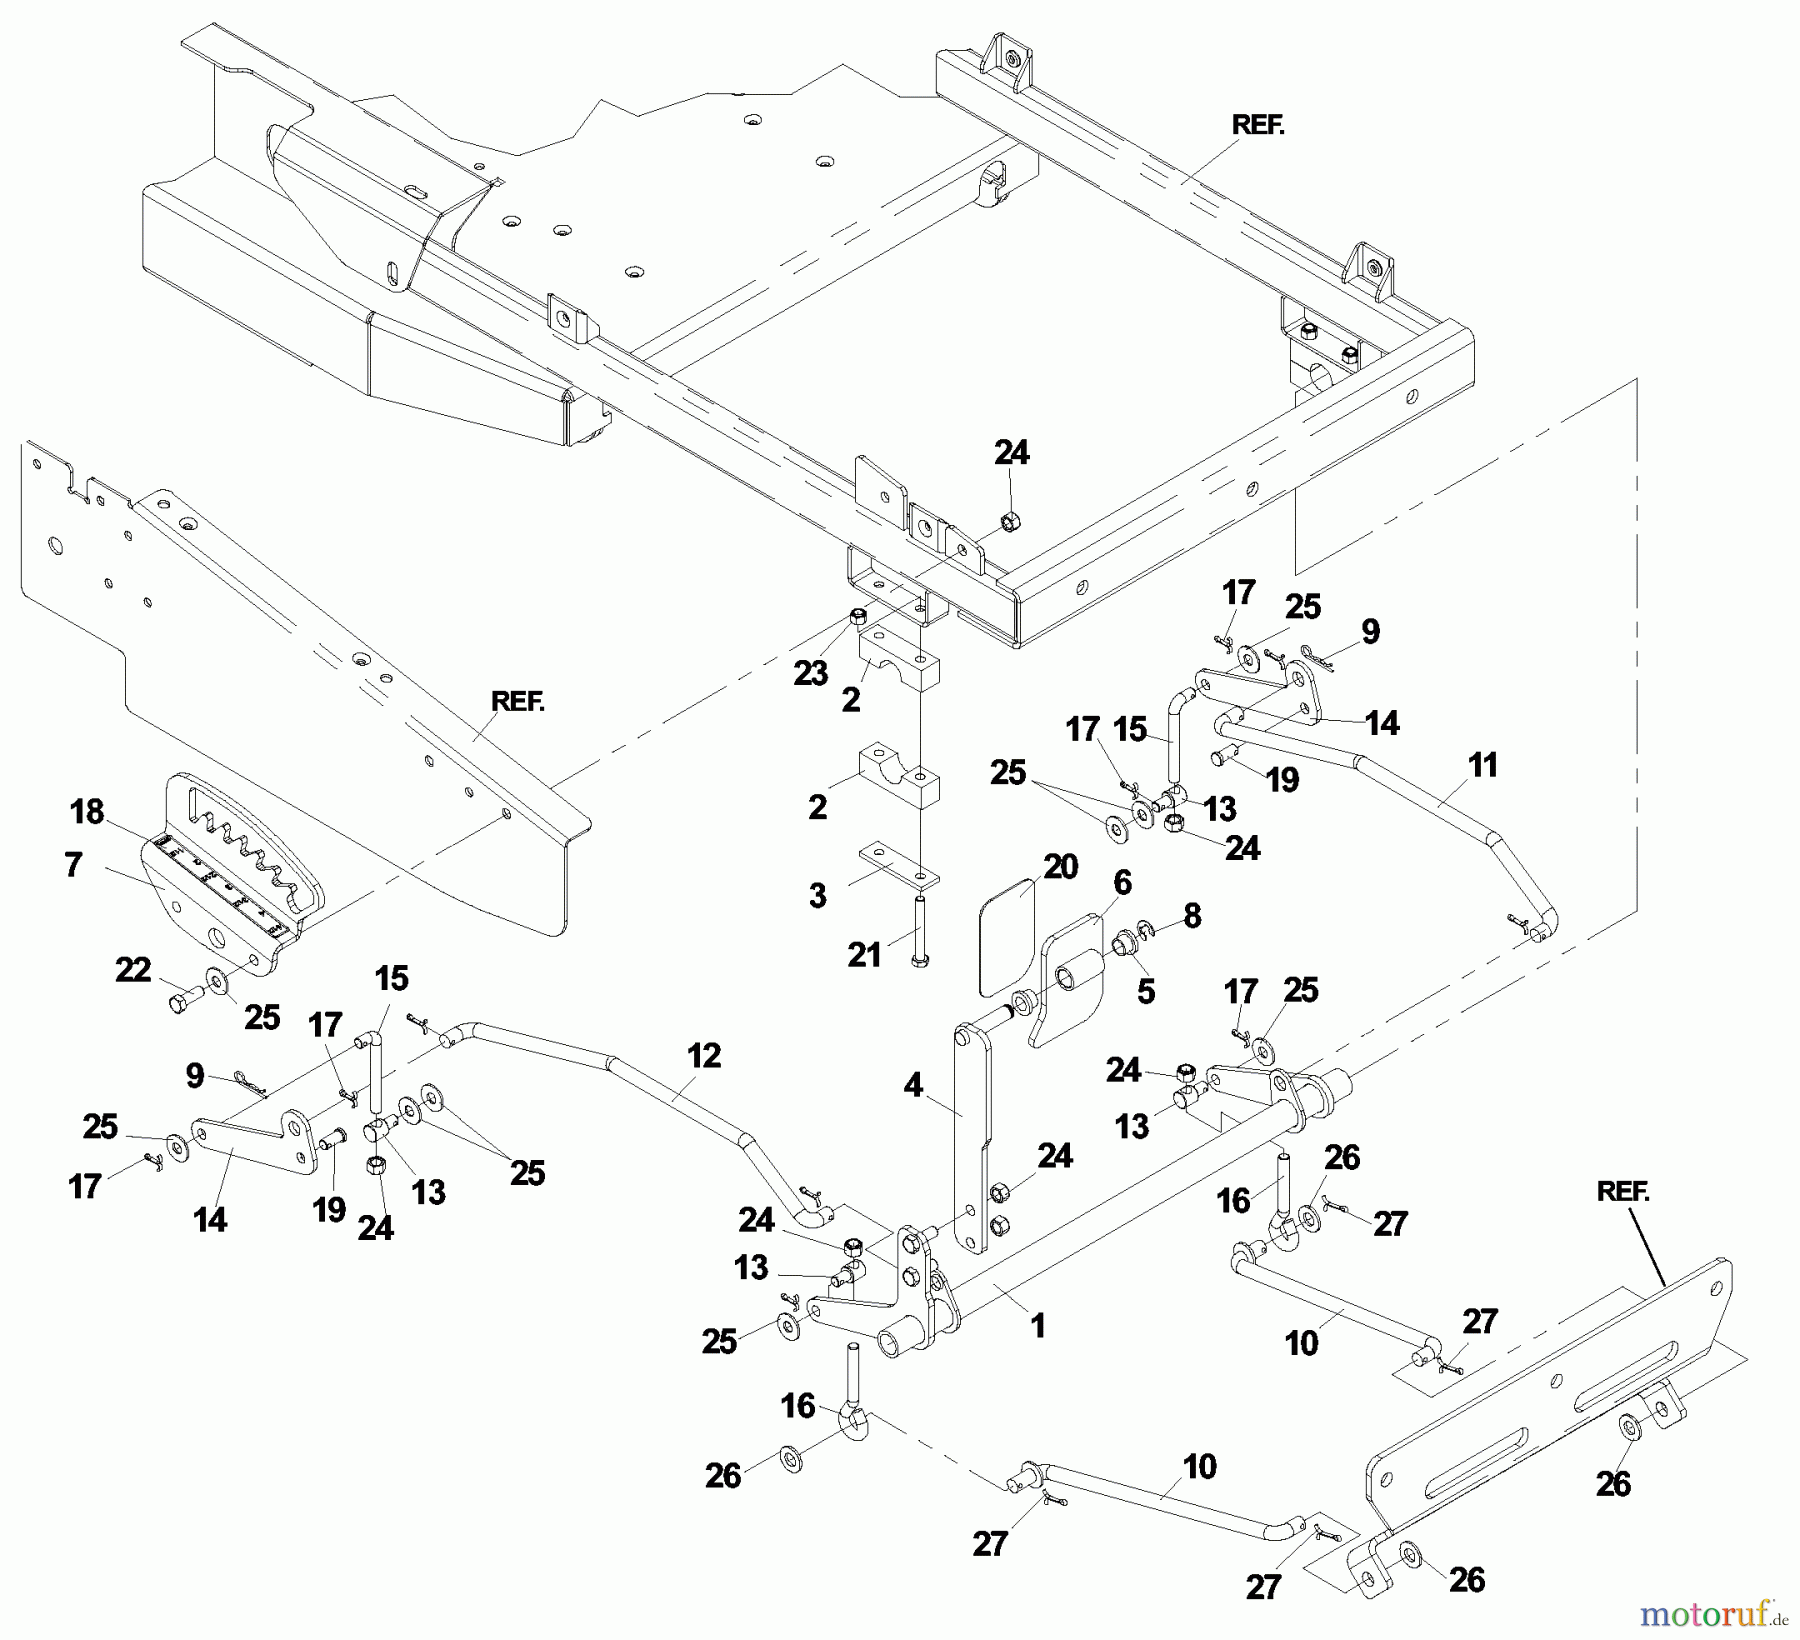  Husqvarna Nullwendekreismäher, Zero-Turn CZ 4817 (968999220) - Husqvarna KOA Zero-Turn Mower (2002-11 & After) Deck Lift Assembly